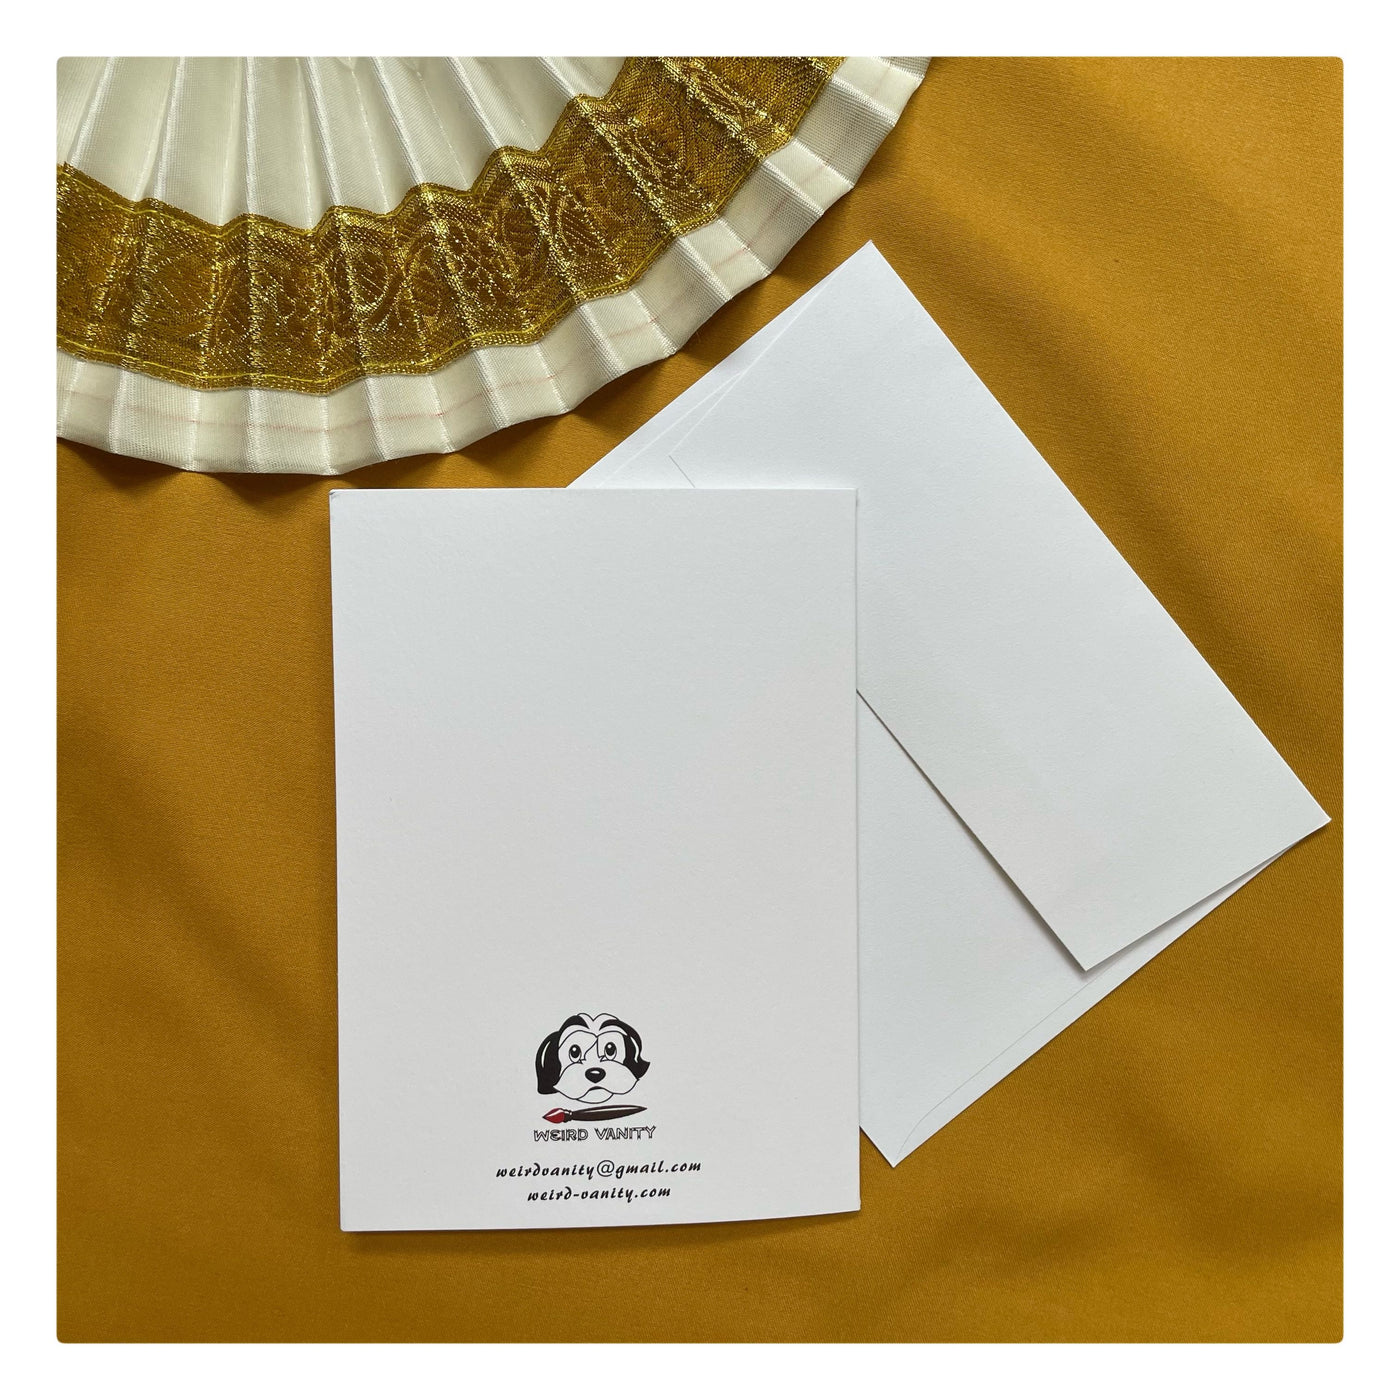 Happy Onam Kerala Greeting Card 4x5.6” with envelope